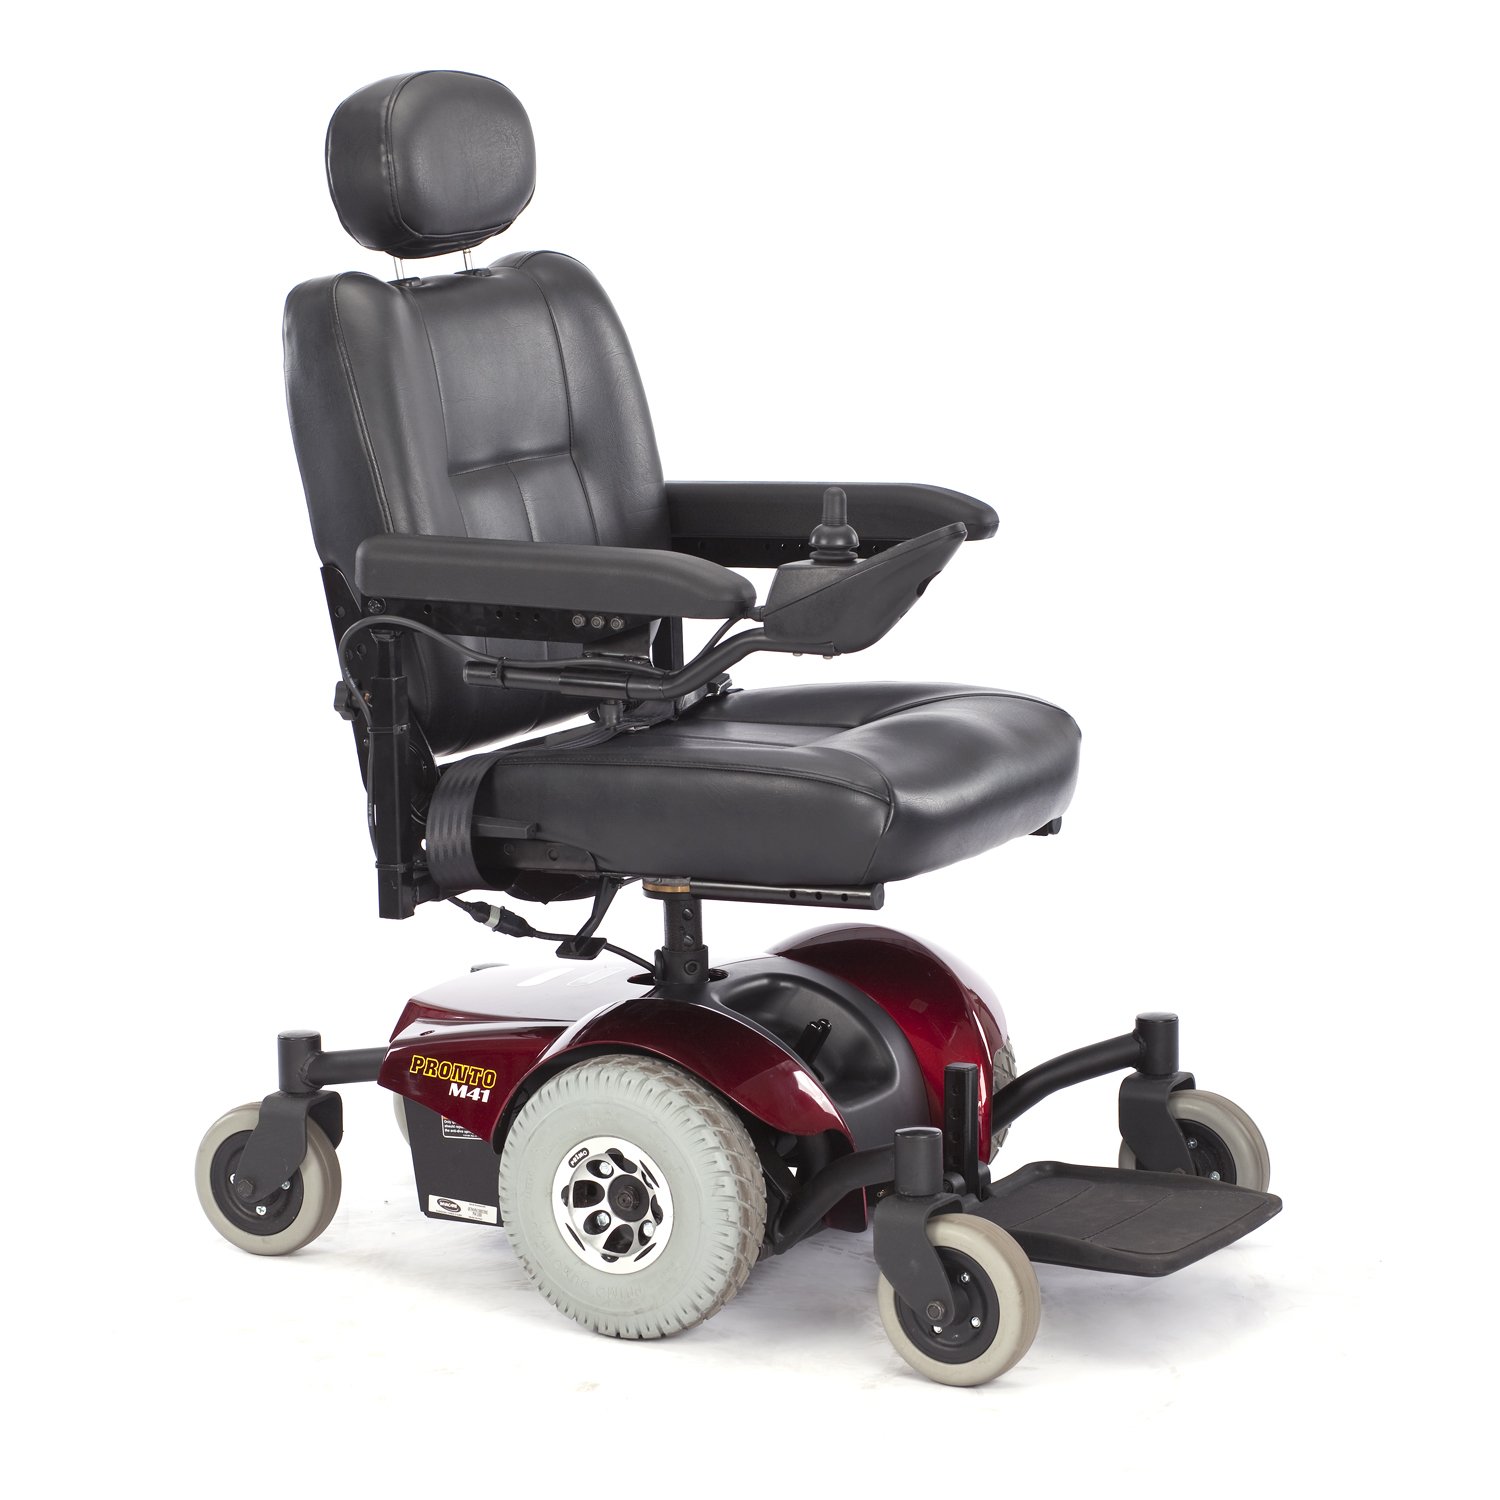 Invacare® Pronto® M41™ Power Wheelchair